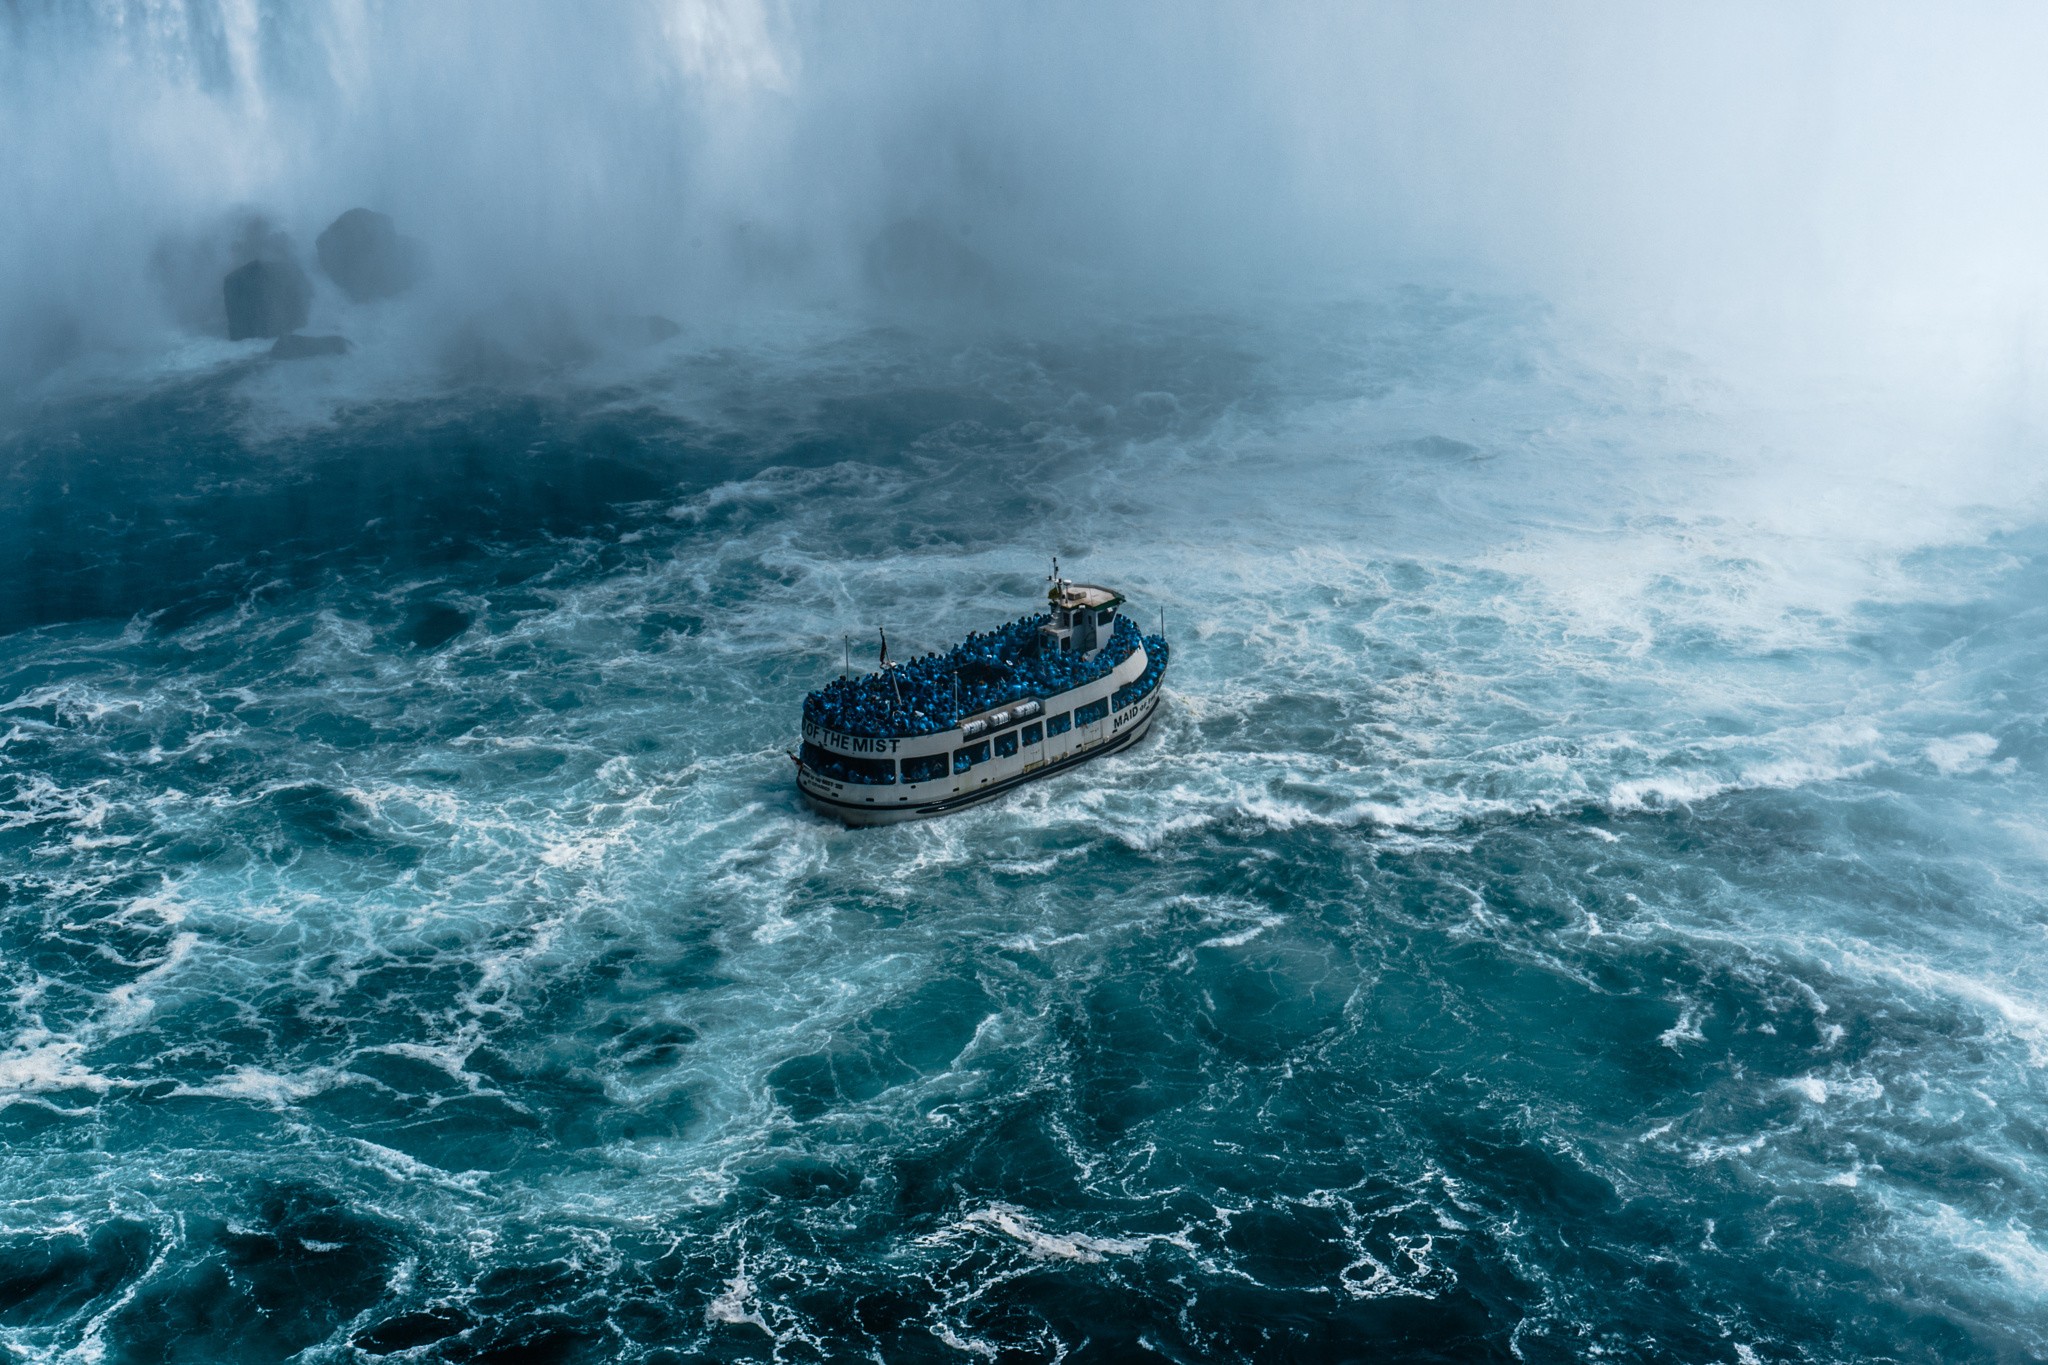 General 2048x1365 Niagara Falls waterfall river ferry